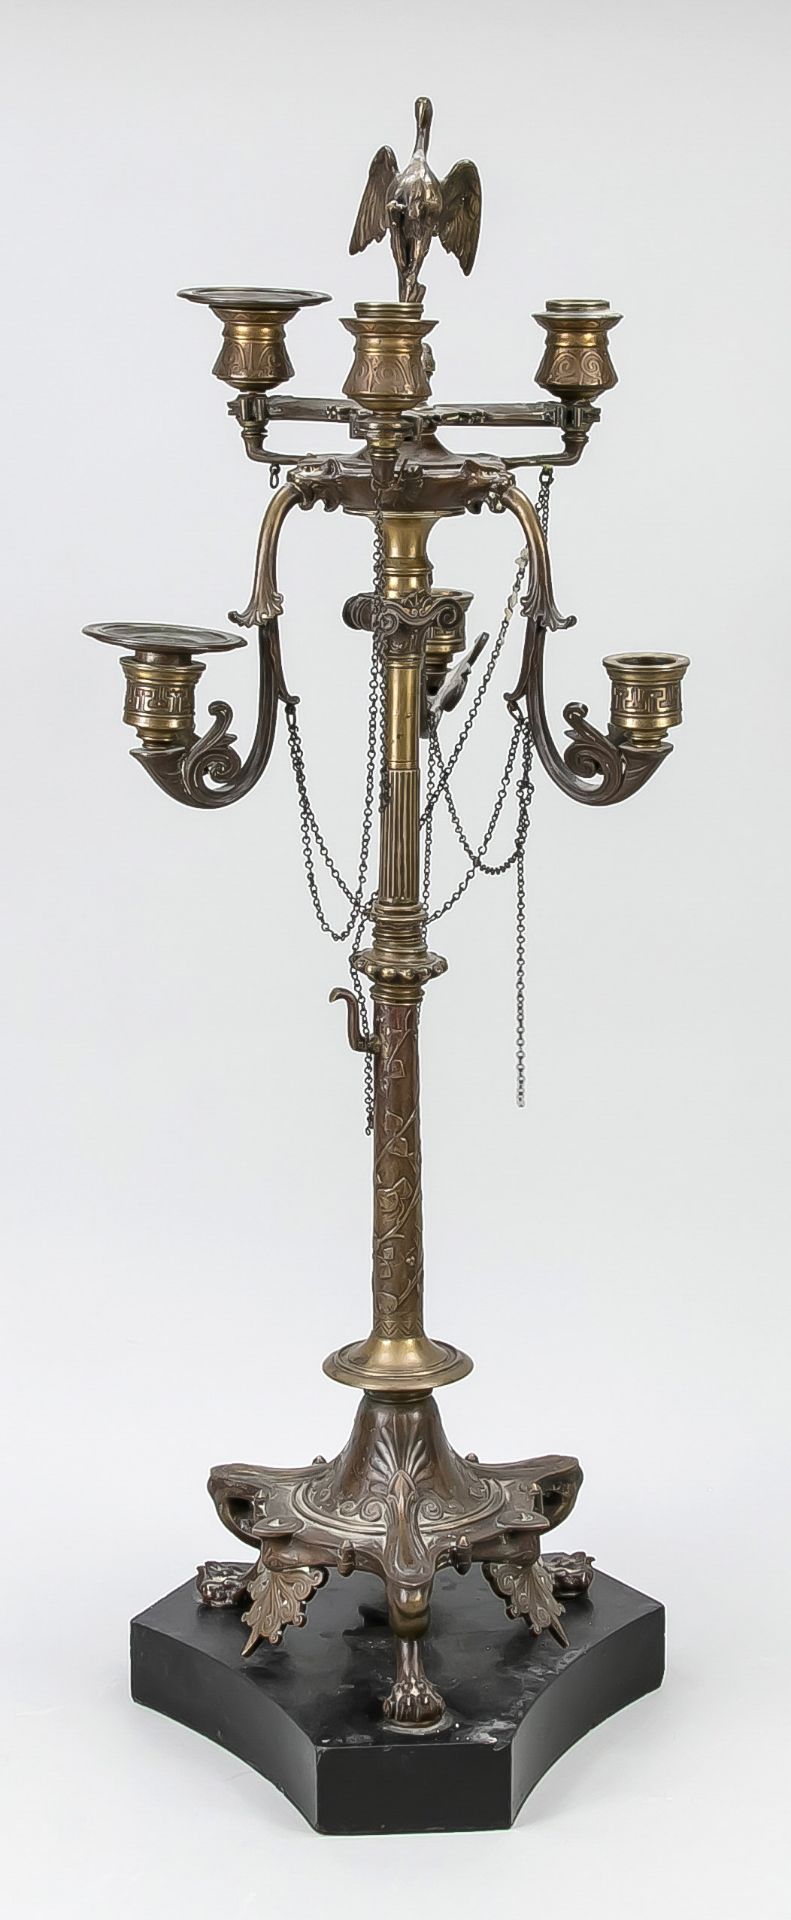 Large candlestick, late 19th century, bronze, polished stone. Ornamented tripod base on a tripod